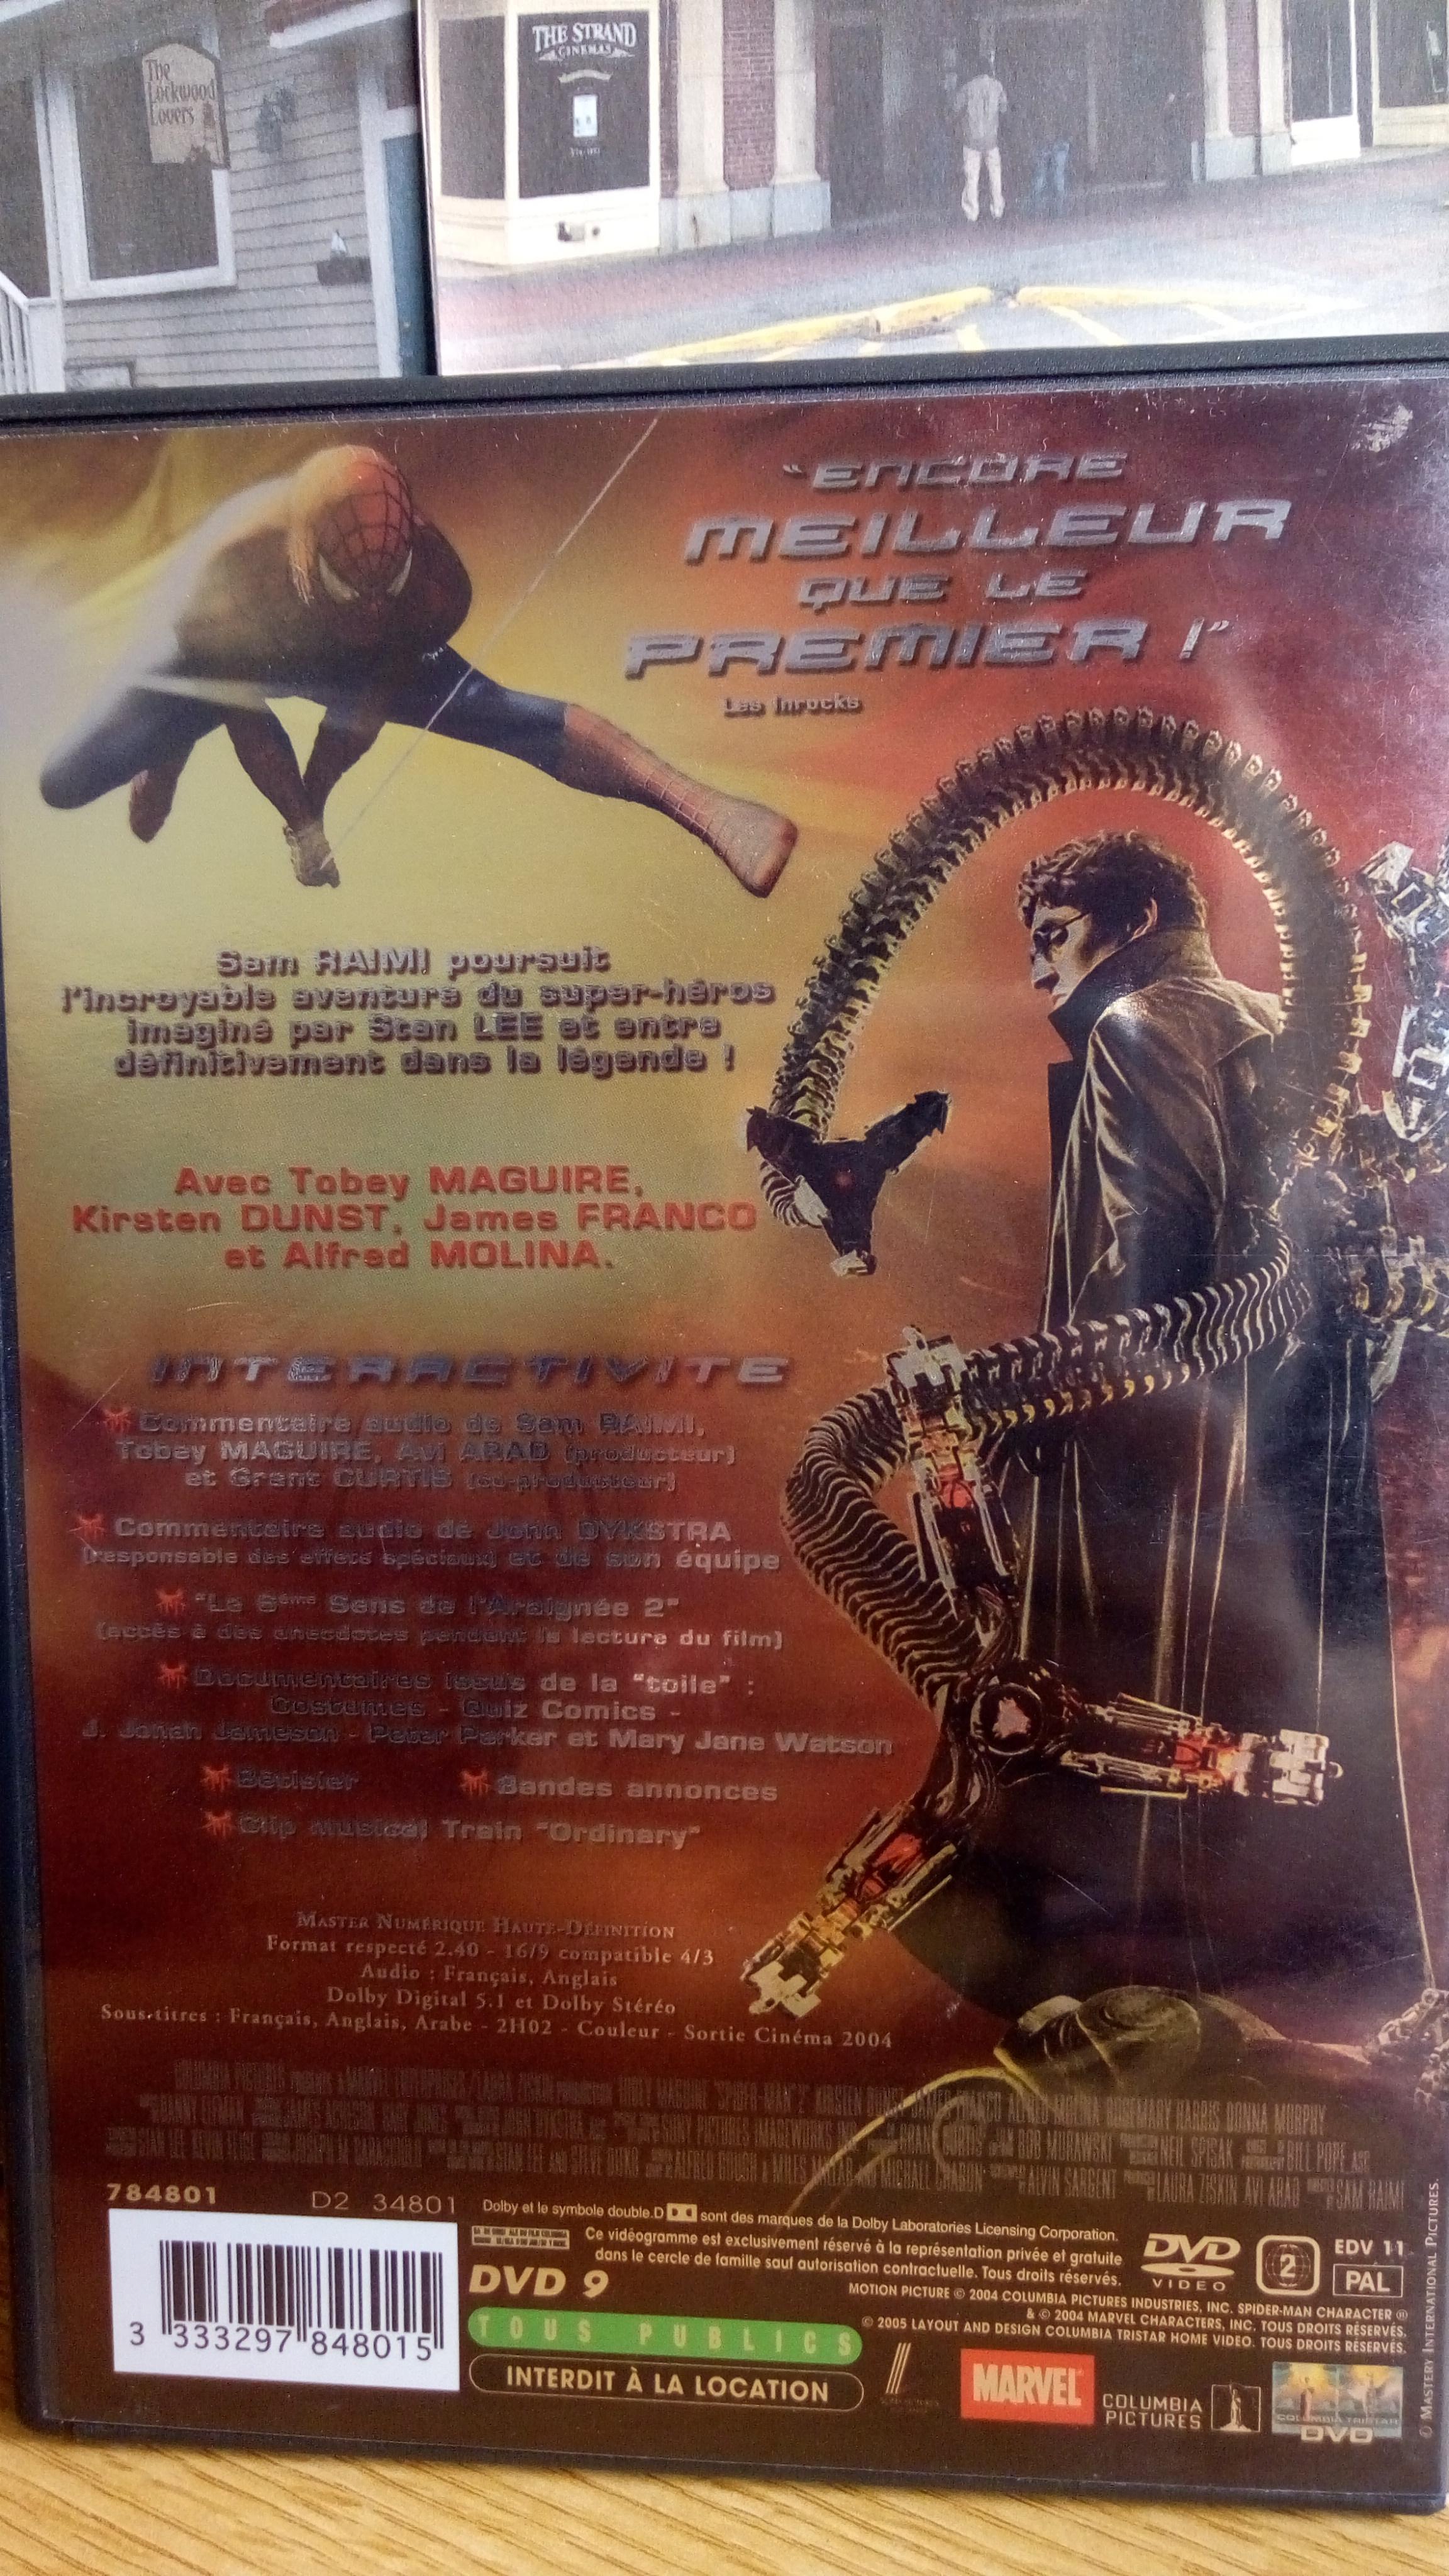 troc de troc spiderman 2  (sam raimi) - dvd image 1